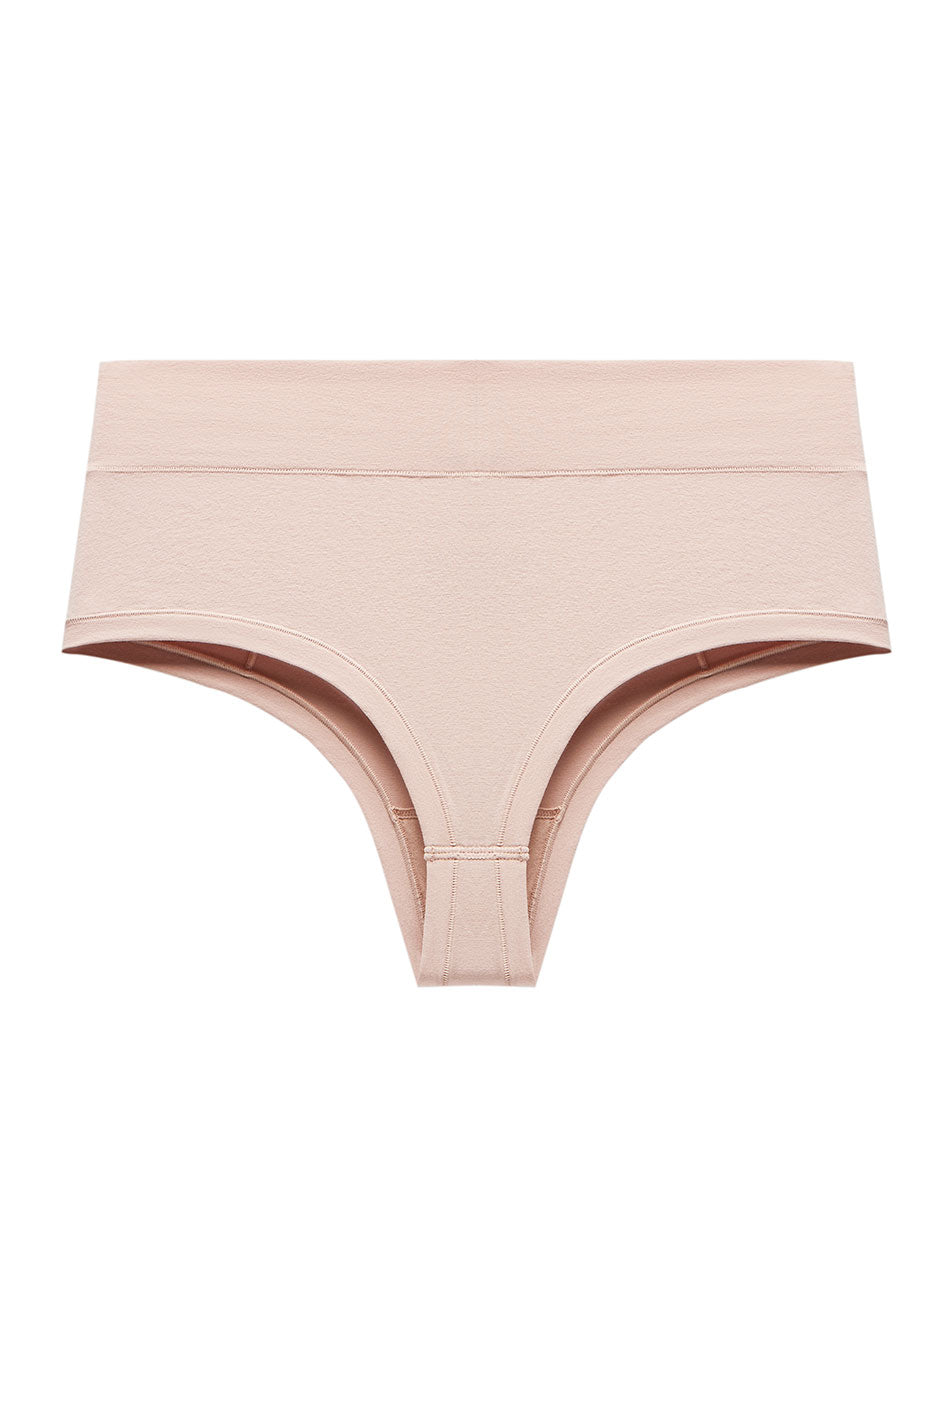 OIMG Women Solid Color Ice Silk Seamless Underwear Mid Waist